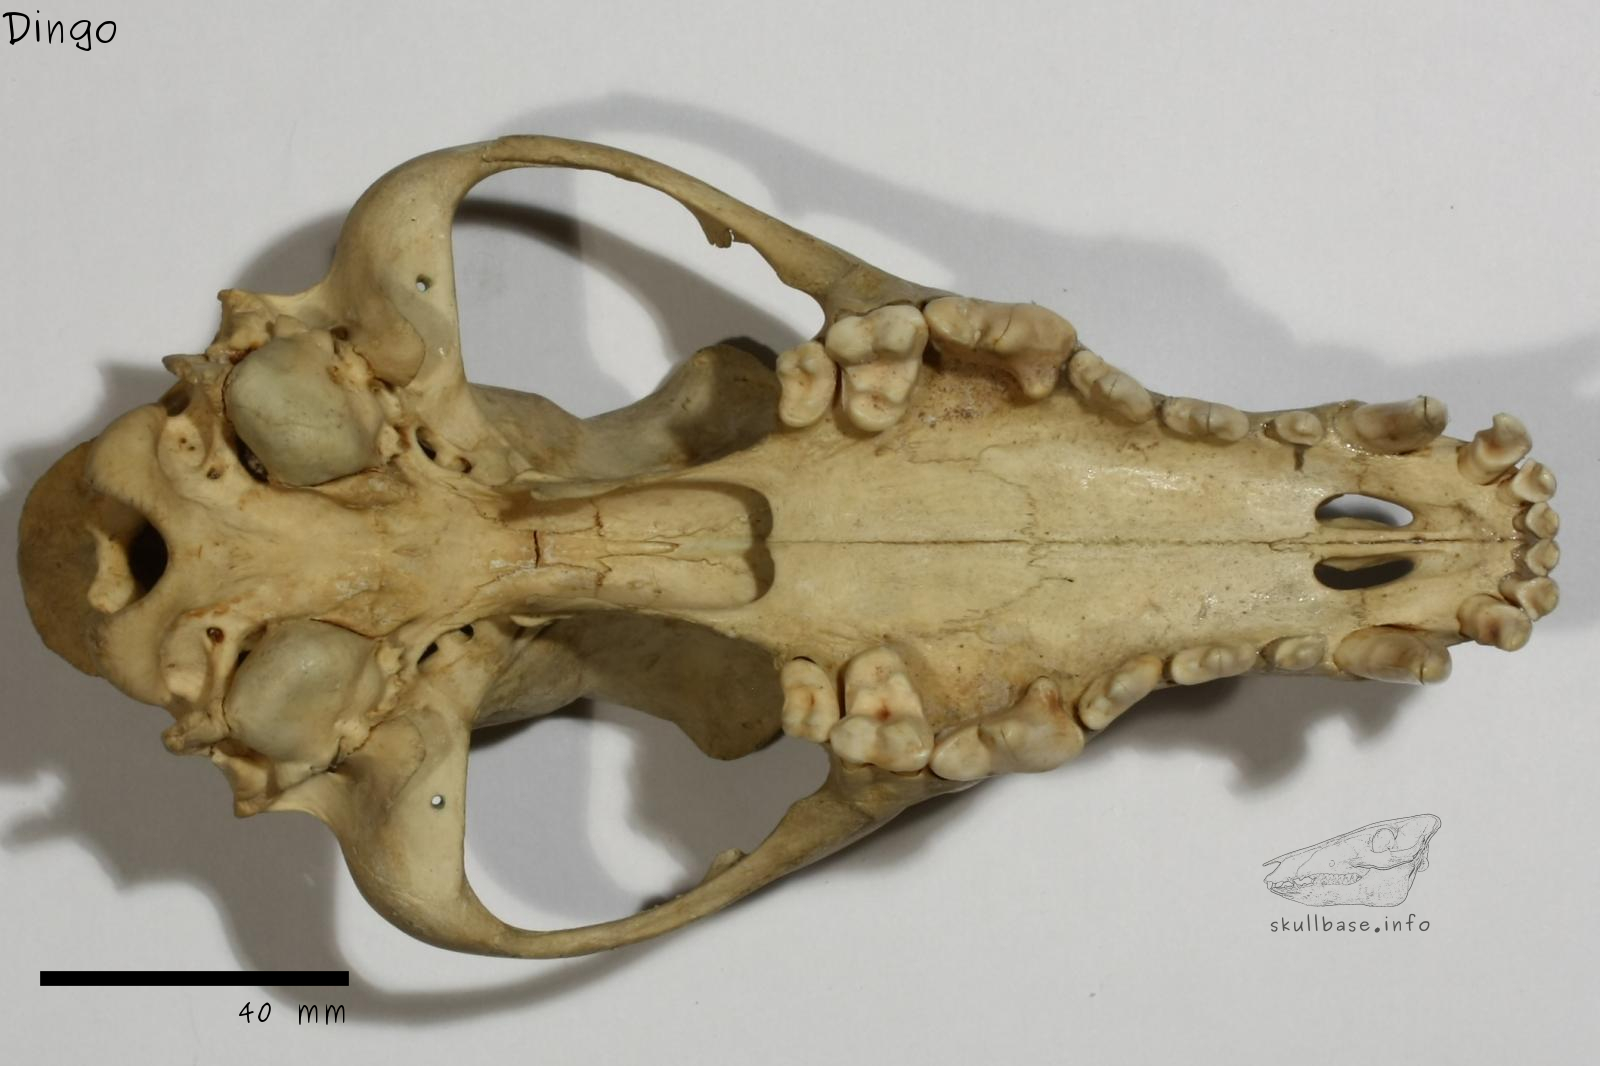 Dingo (Canis lupus dingo) skull ventral view